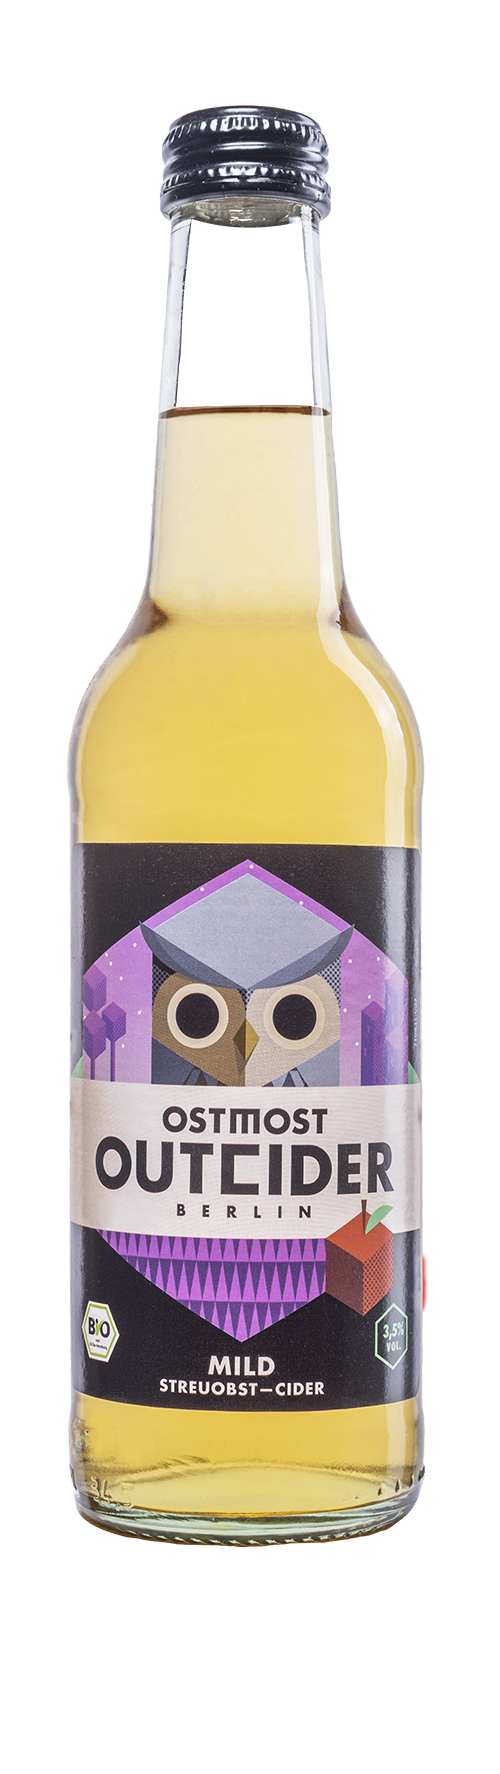 OSTMOST OUTCIDER Bio Streuobst Cider Mild 3,5% 330ml